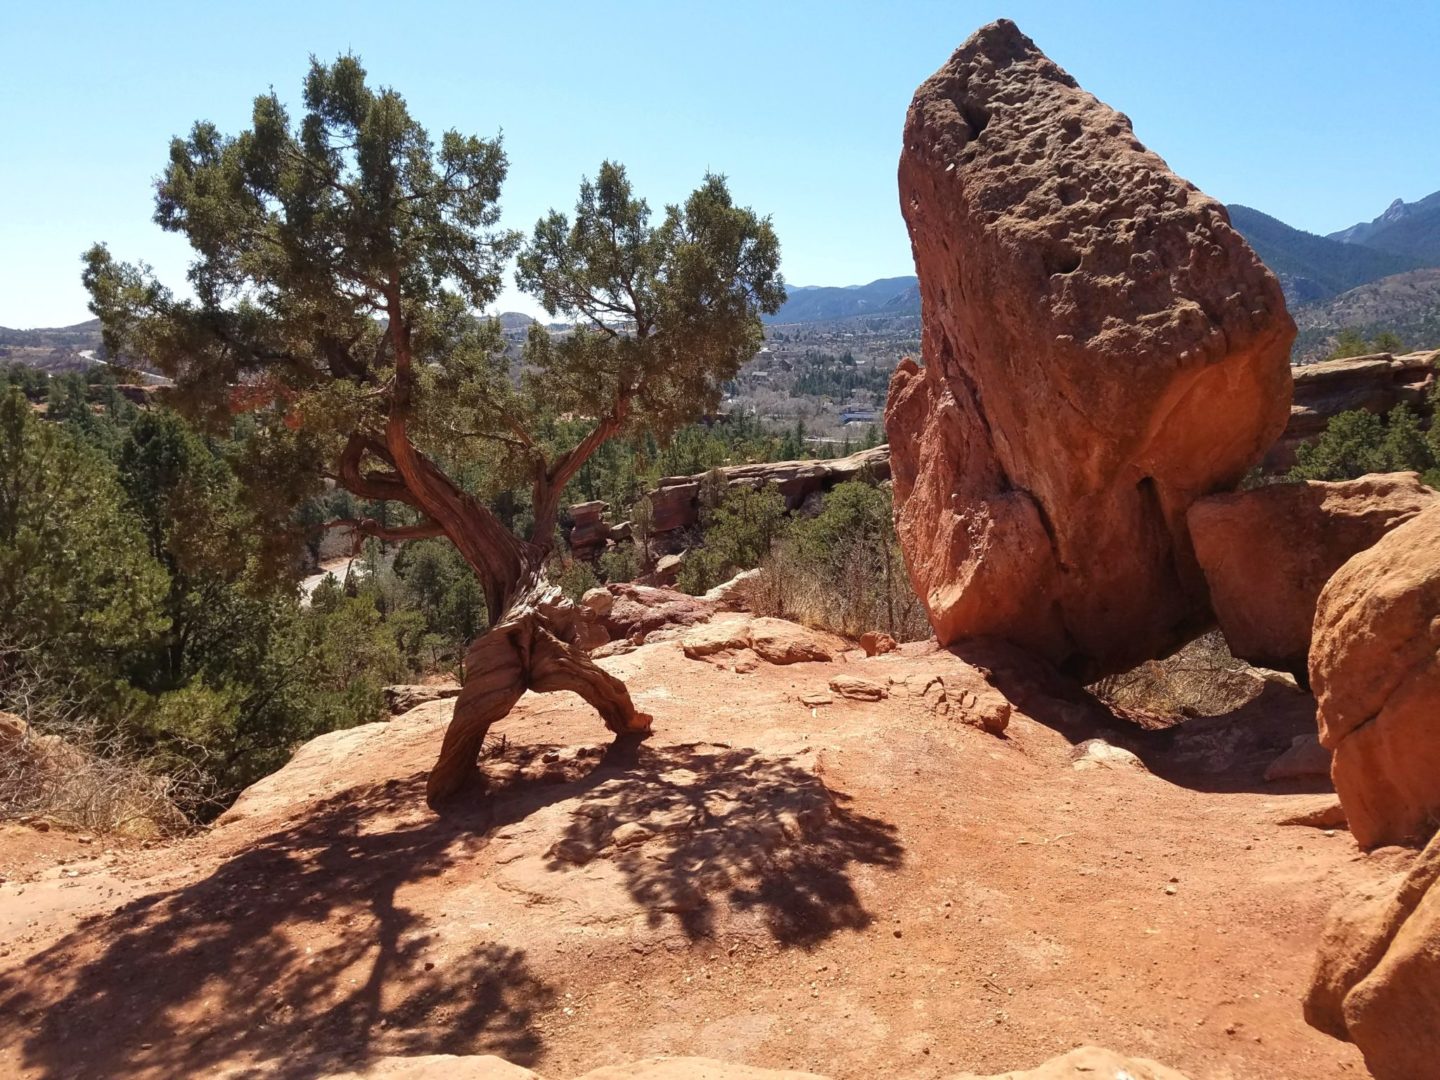 Interesting tree/rock formation